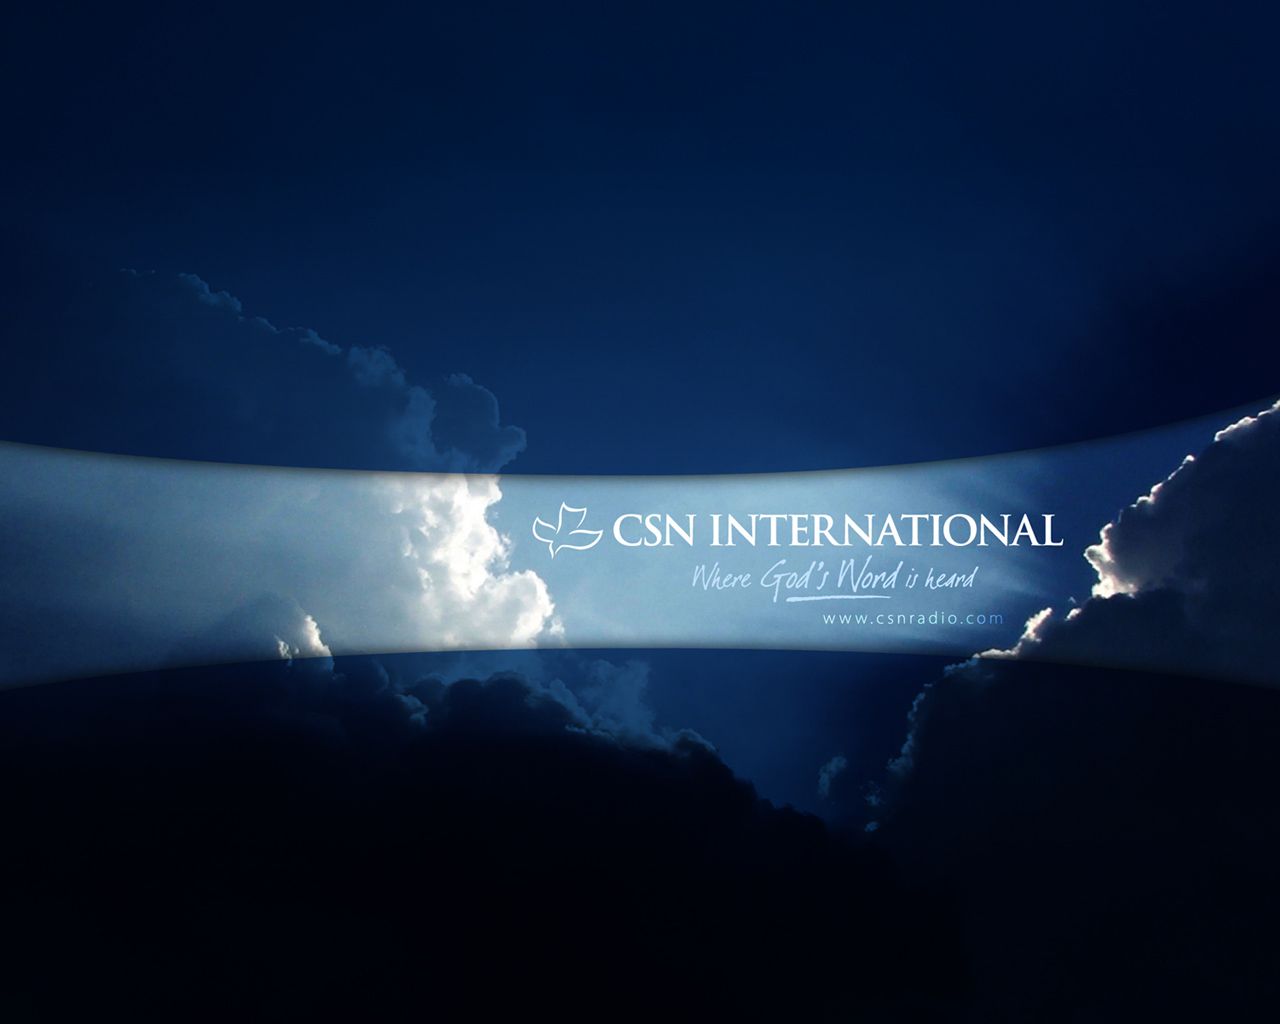 CSN International Wallpaper   Christian Wallpapers and Backgrounds